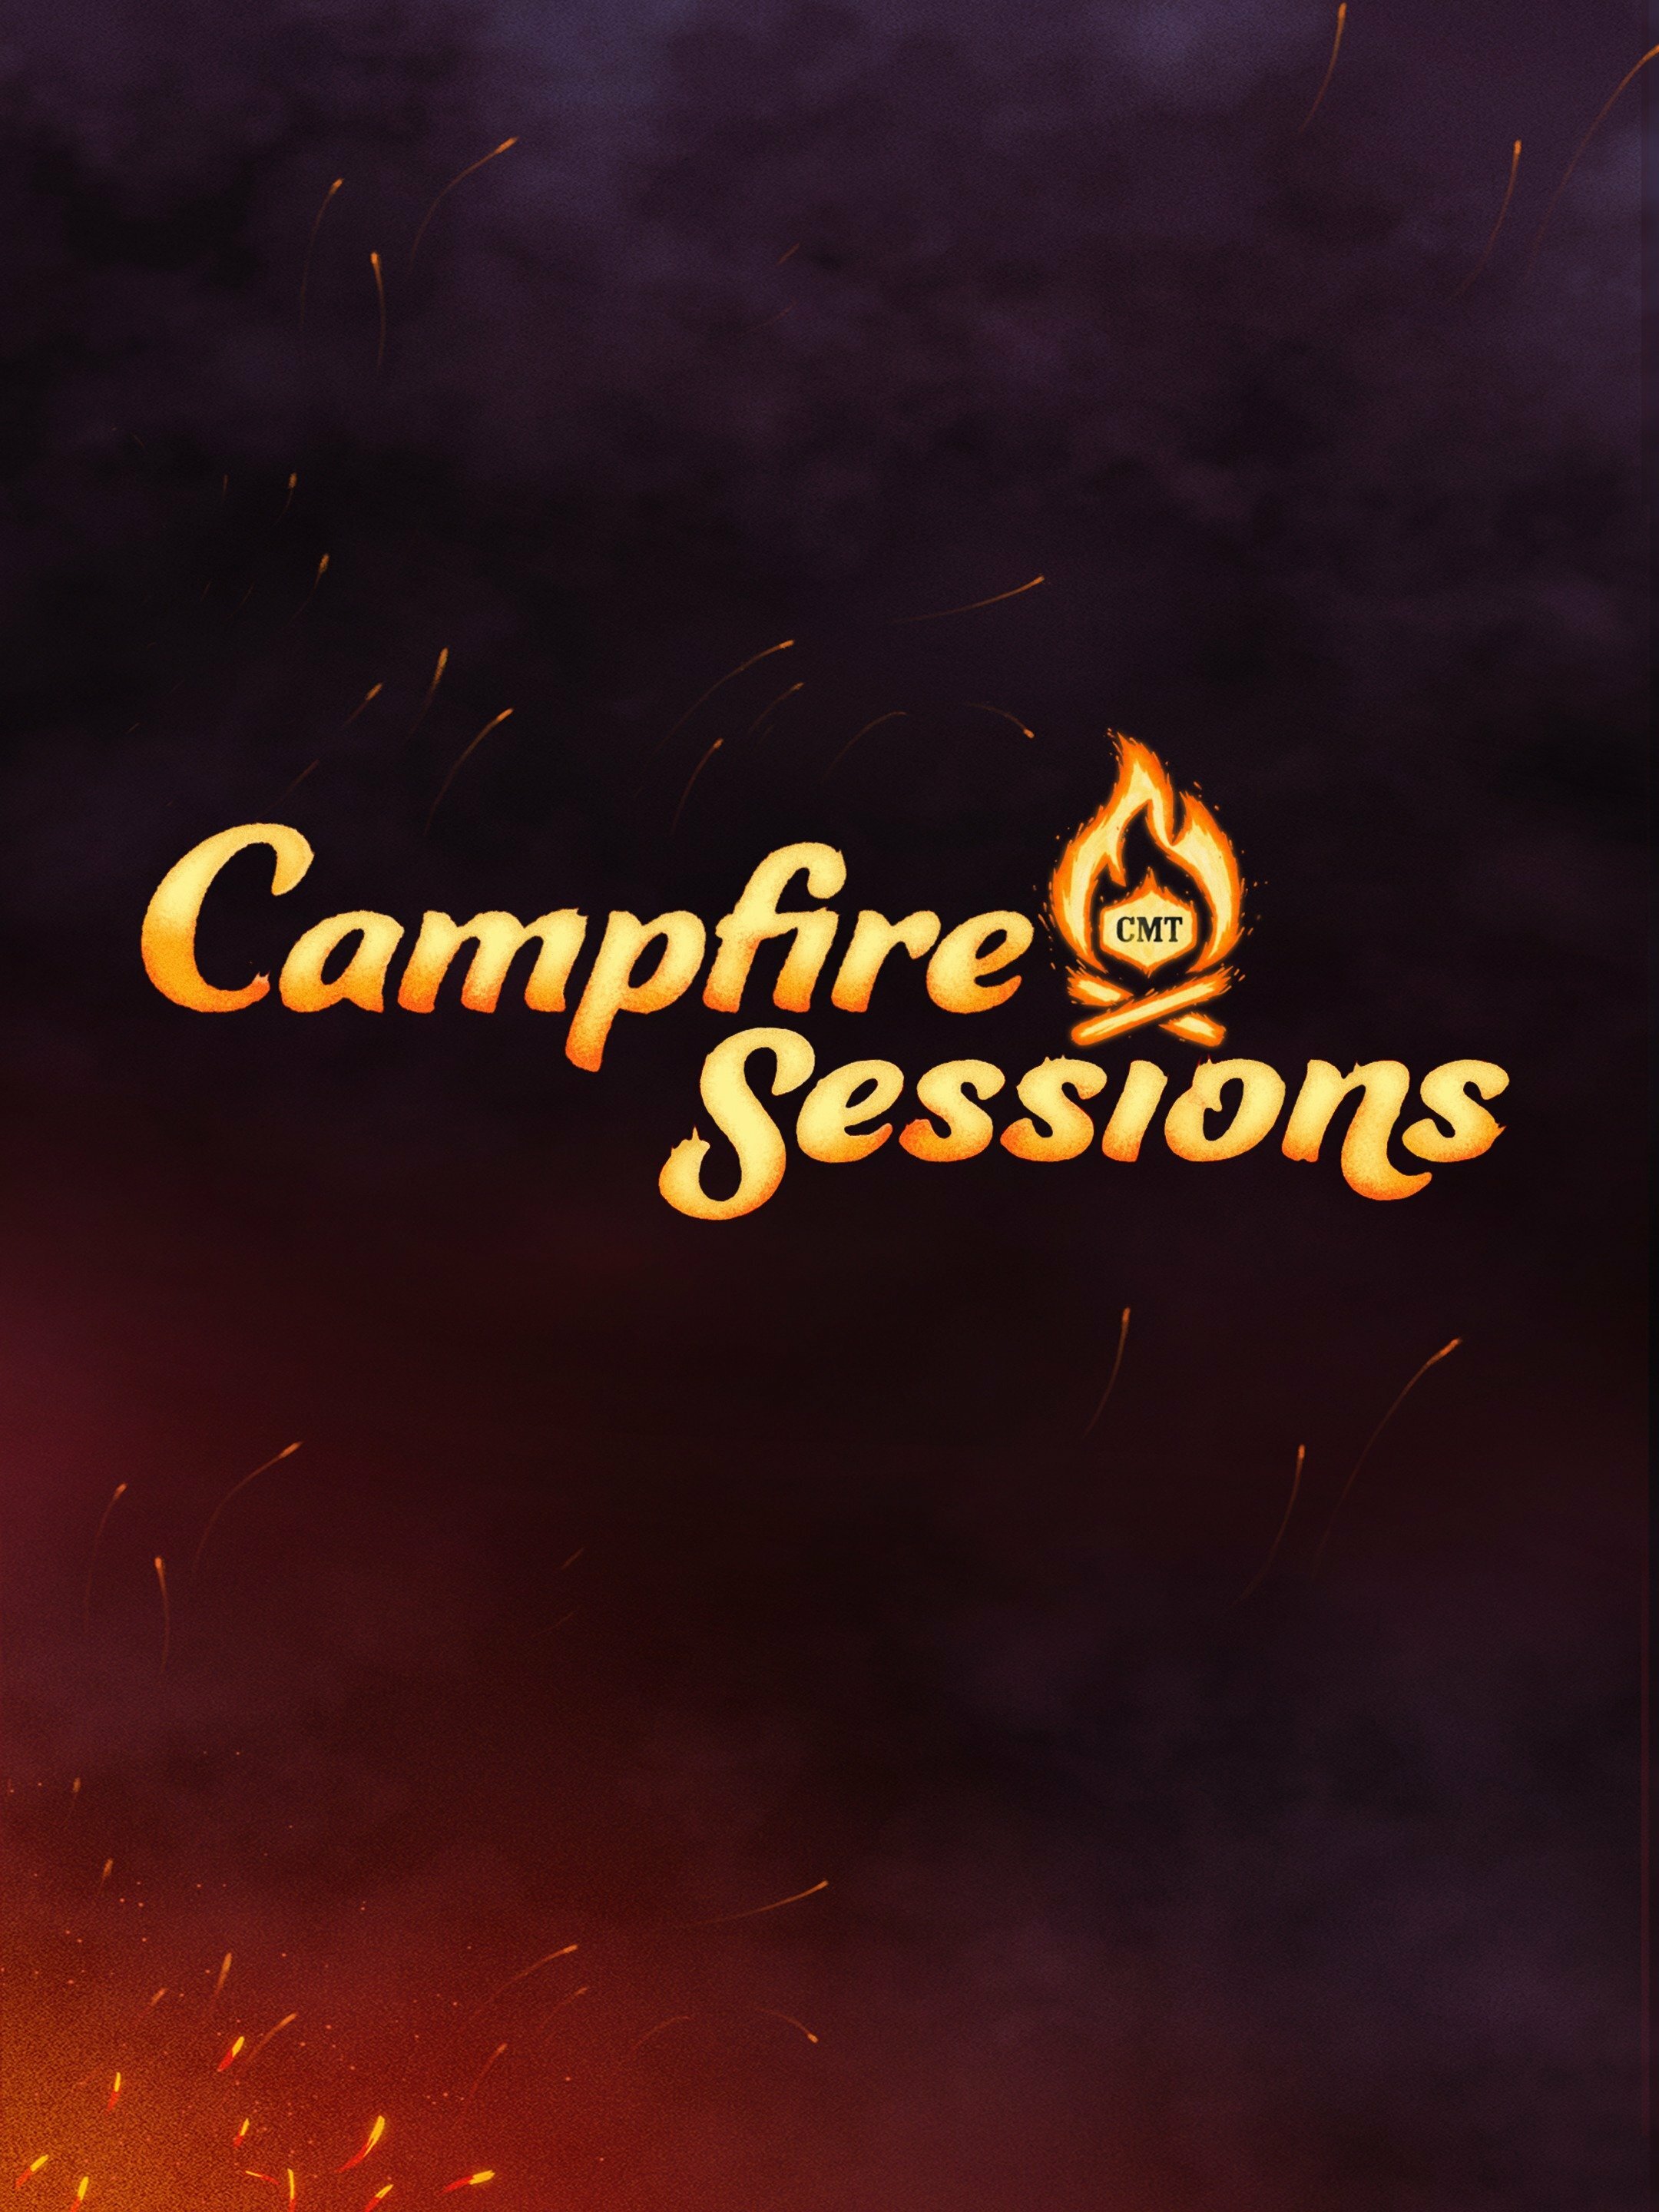 CMT Campfire Sessions ne zaman